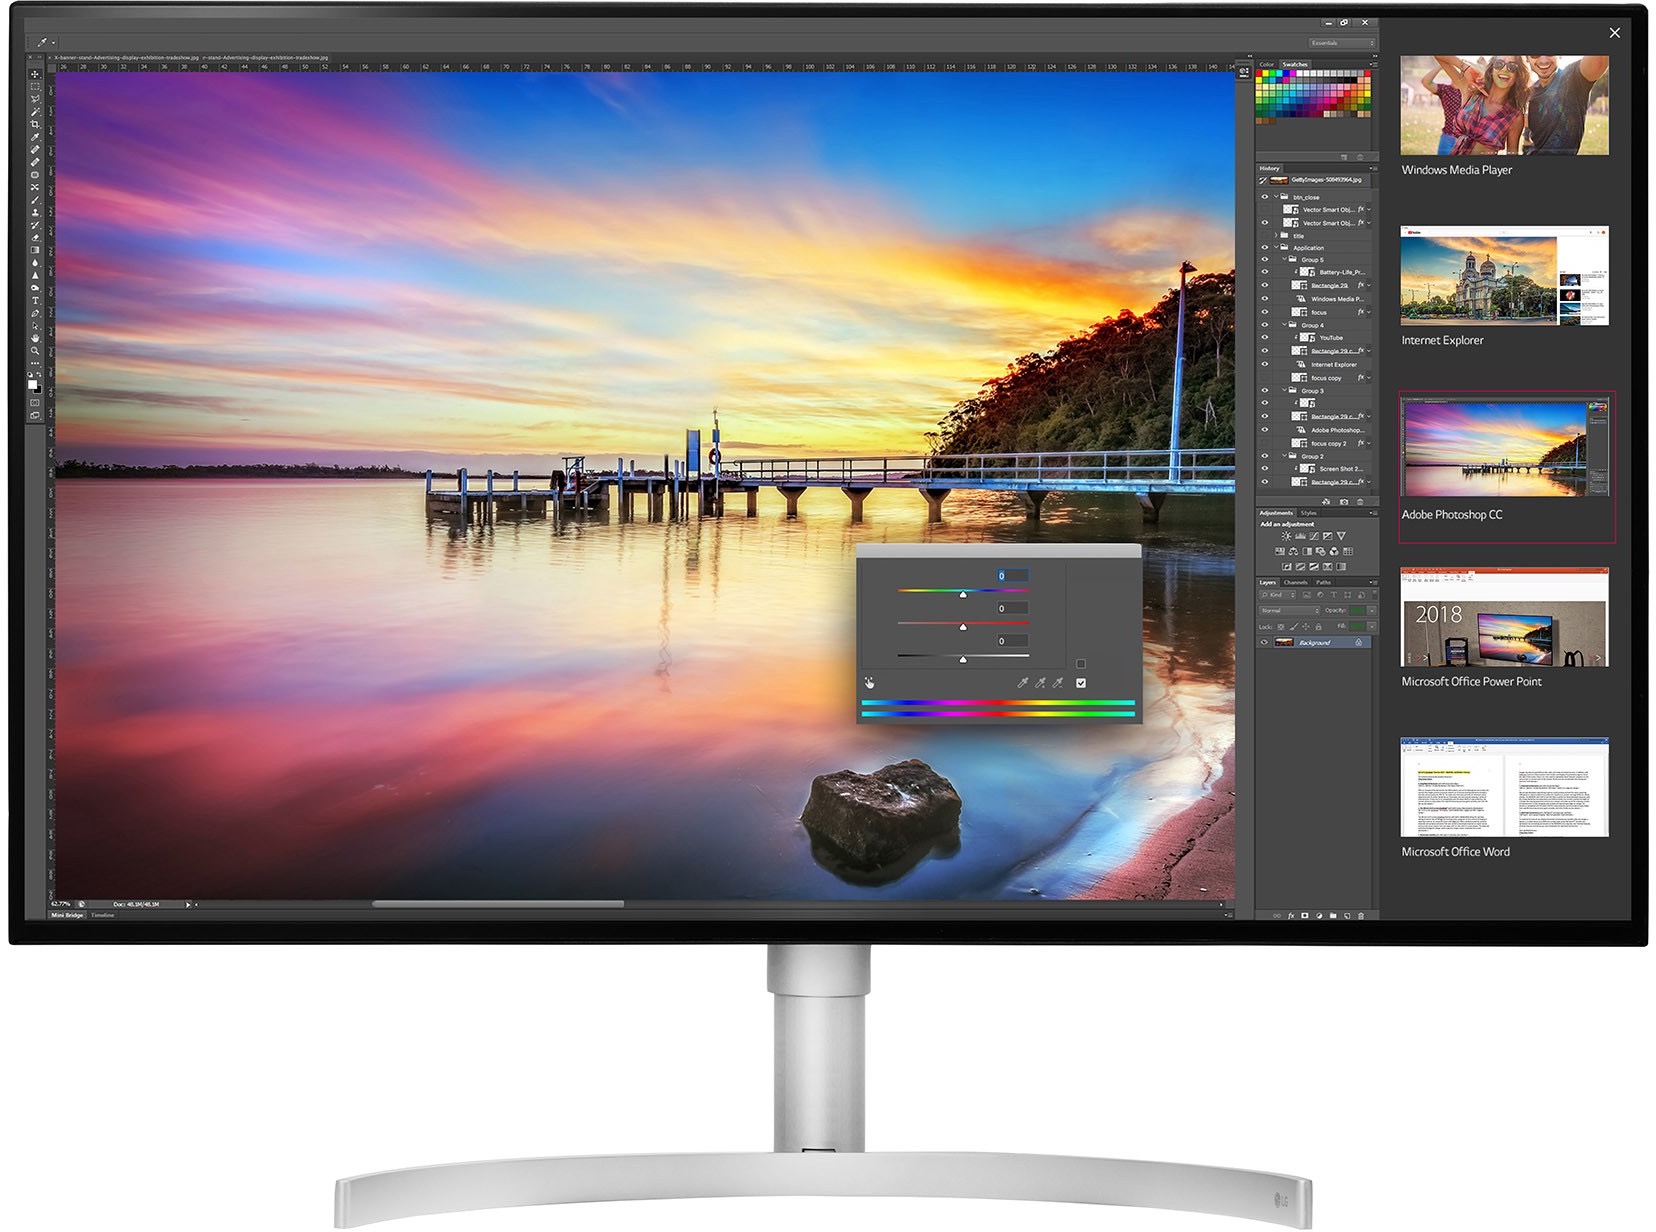 LG's new monitor